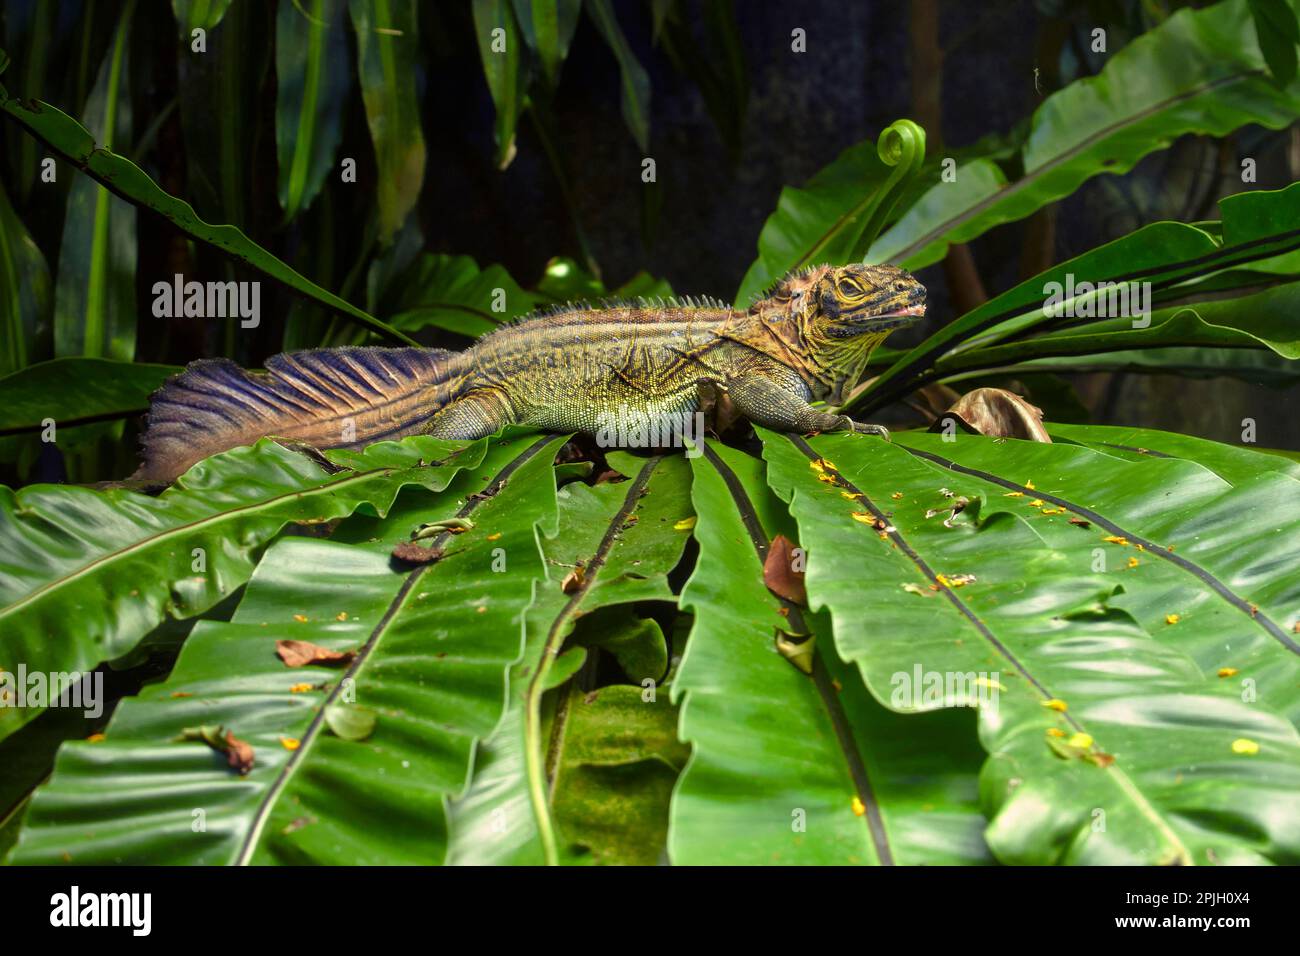 Amboina sail-finned lizards (Hydrosaurus amboinensis), Agamas, Other animals, Reptiles, Animals, Amboina Sail-finned Lizard adult, resting on leaves Stock Photo